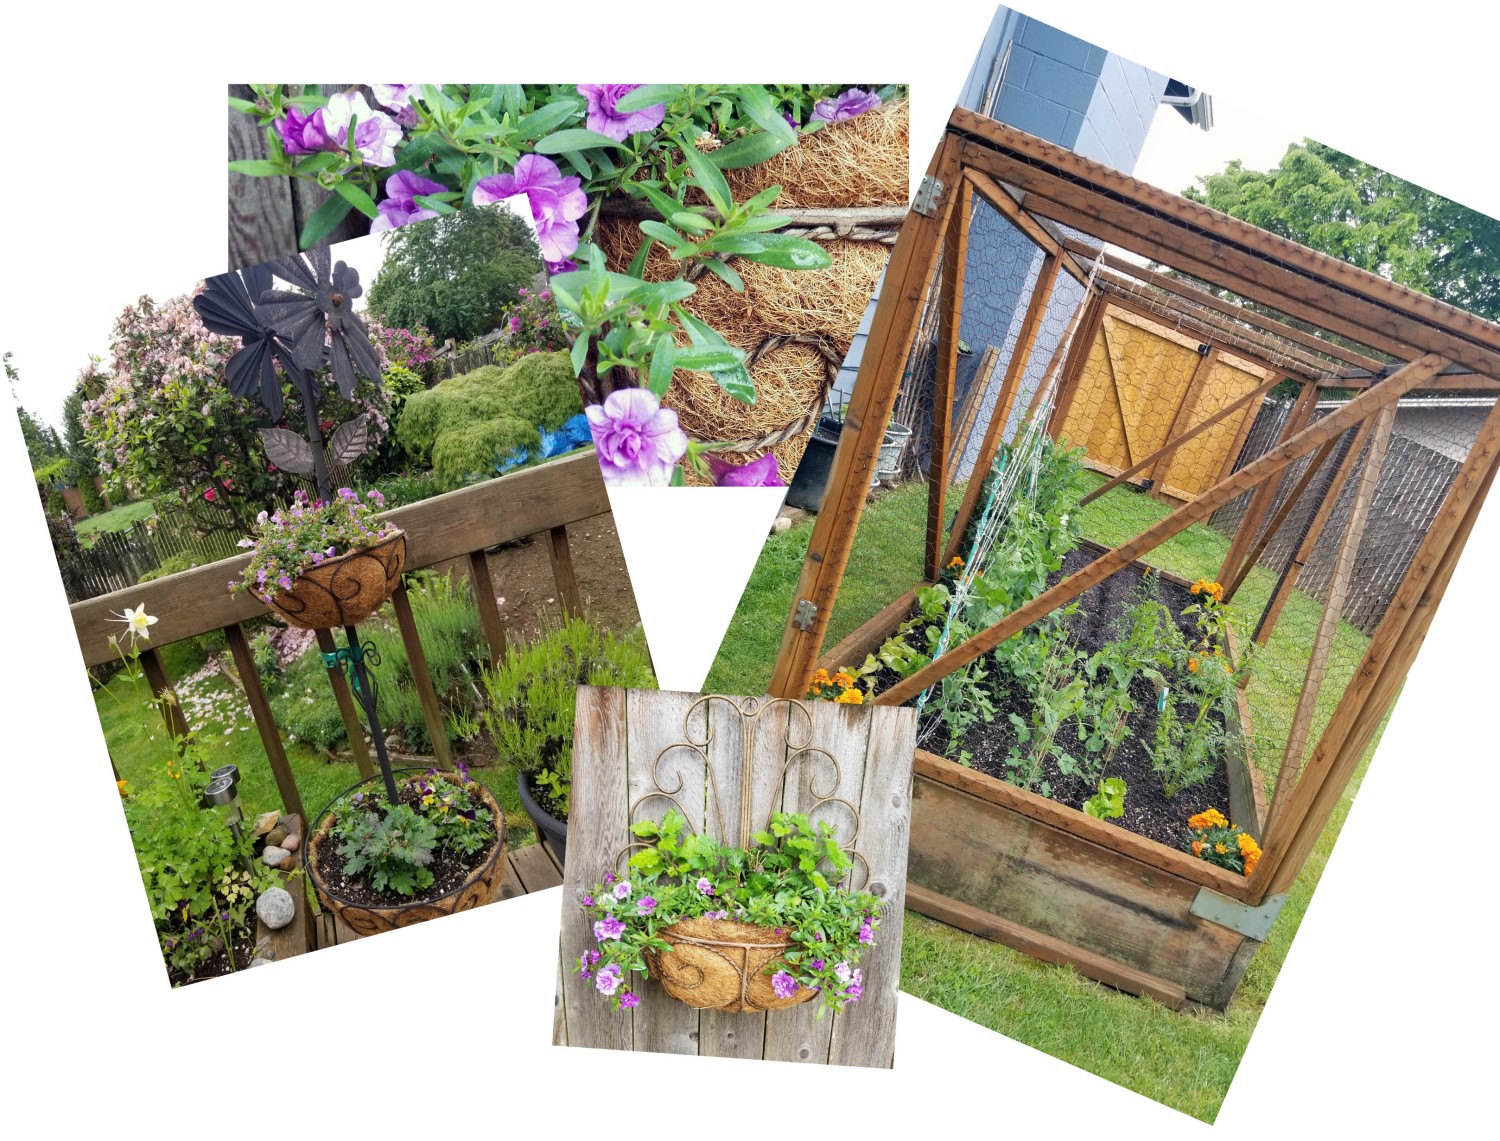 A montage of flower photos from Chris Pennington's garden